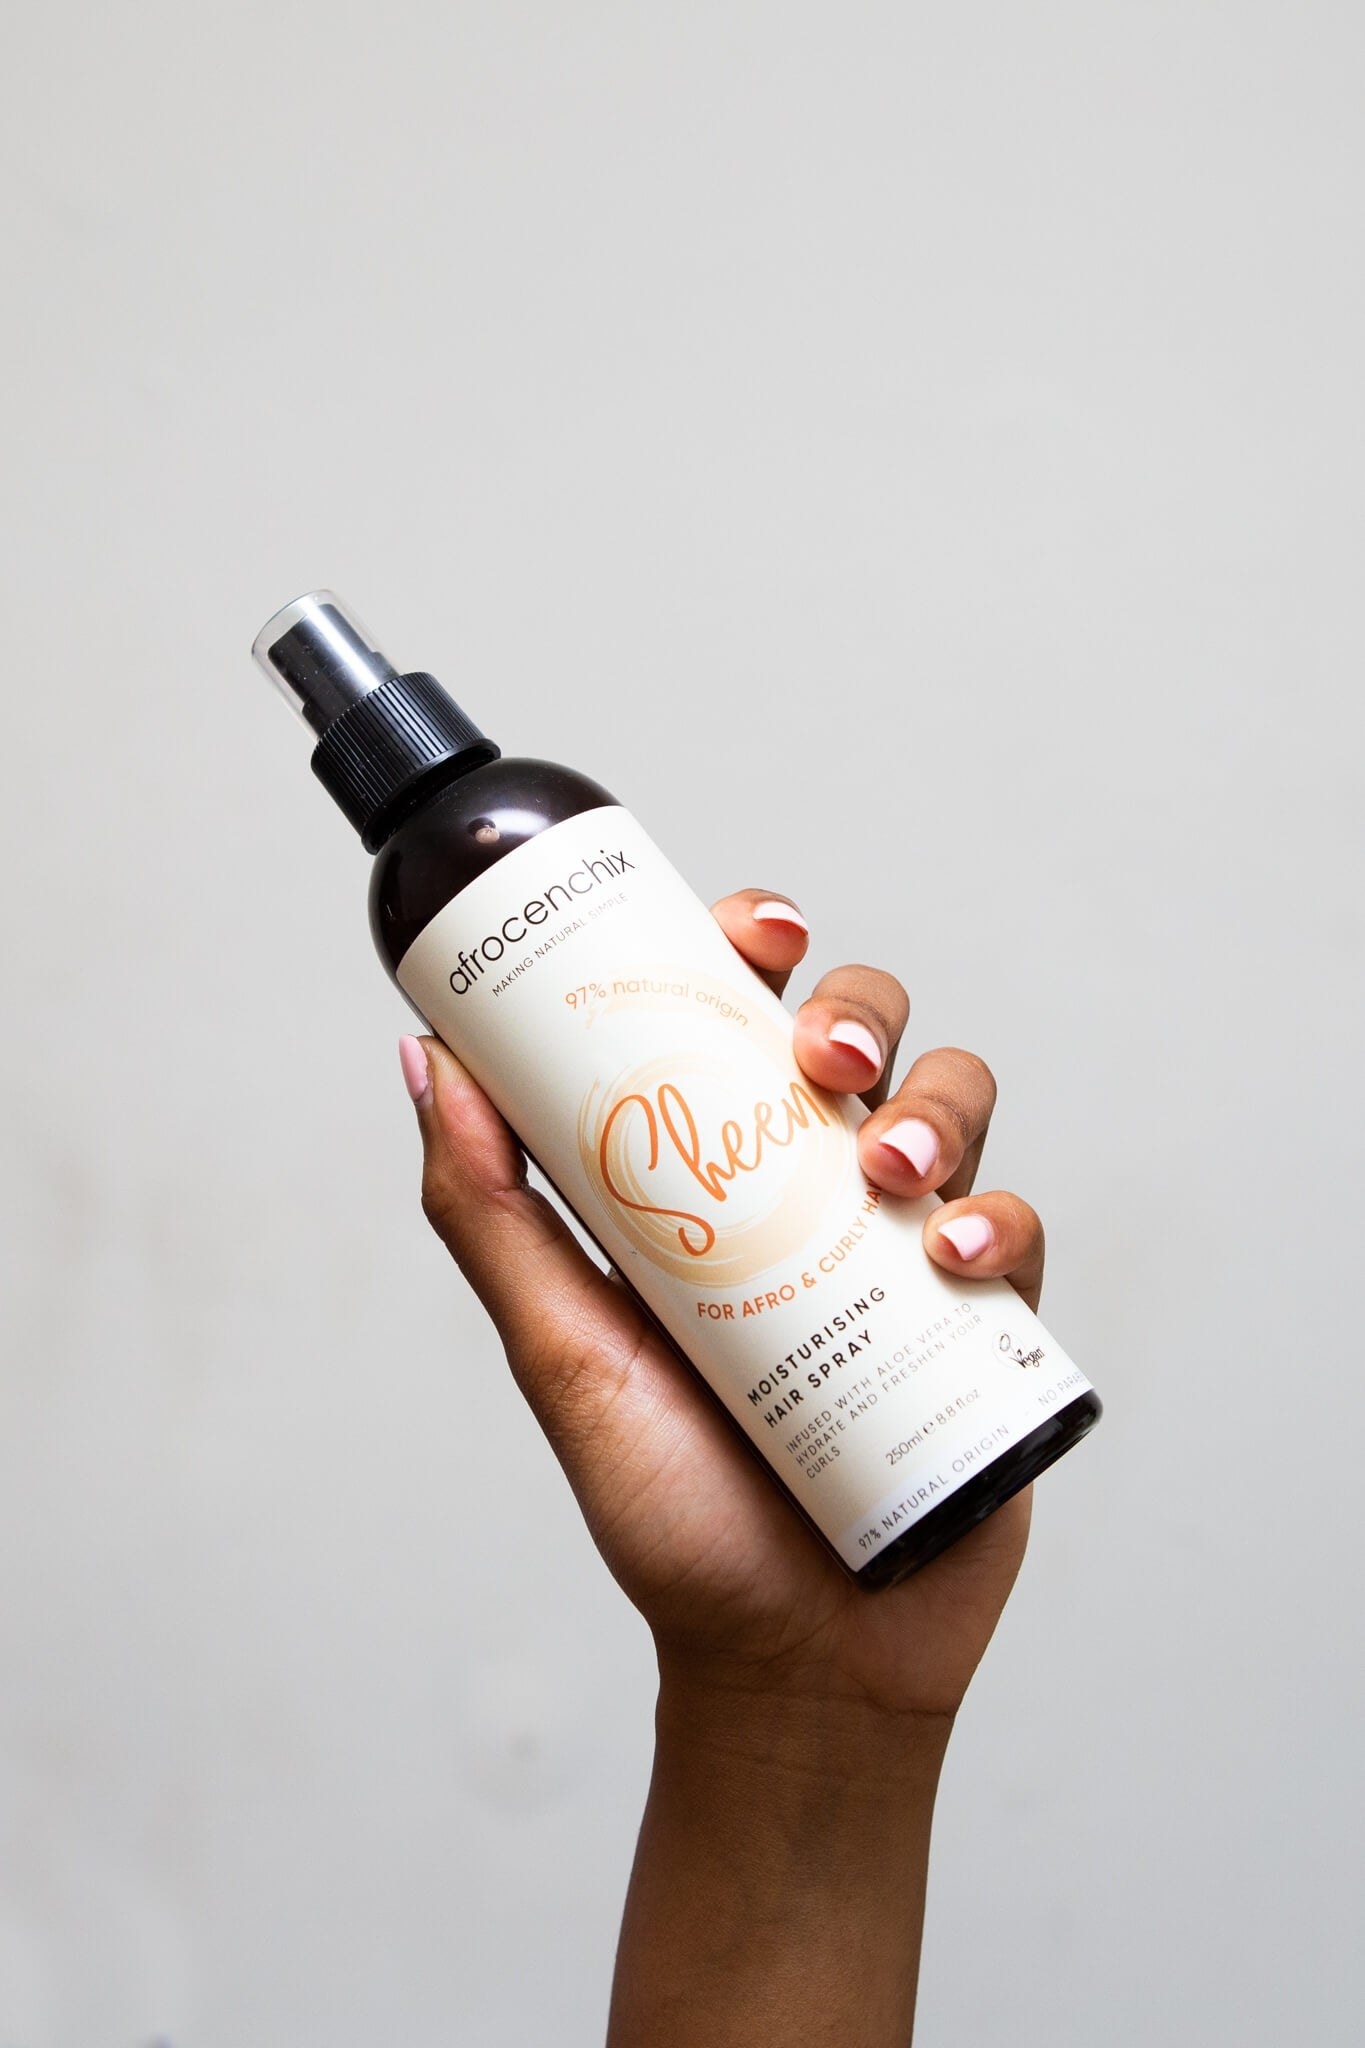 A hand model holds up a bottle of moisturising hair spray.